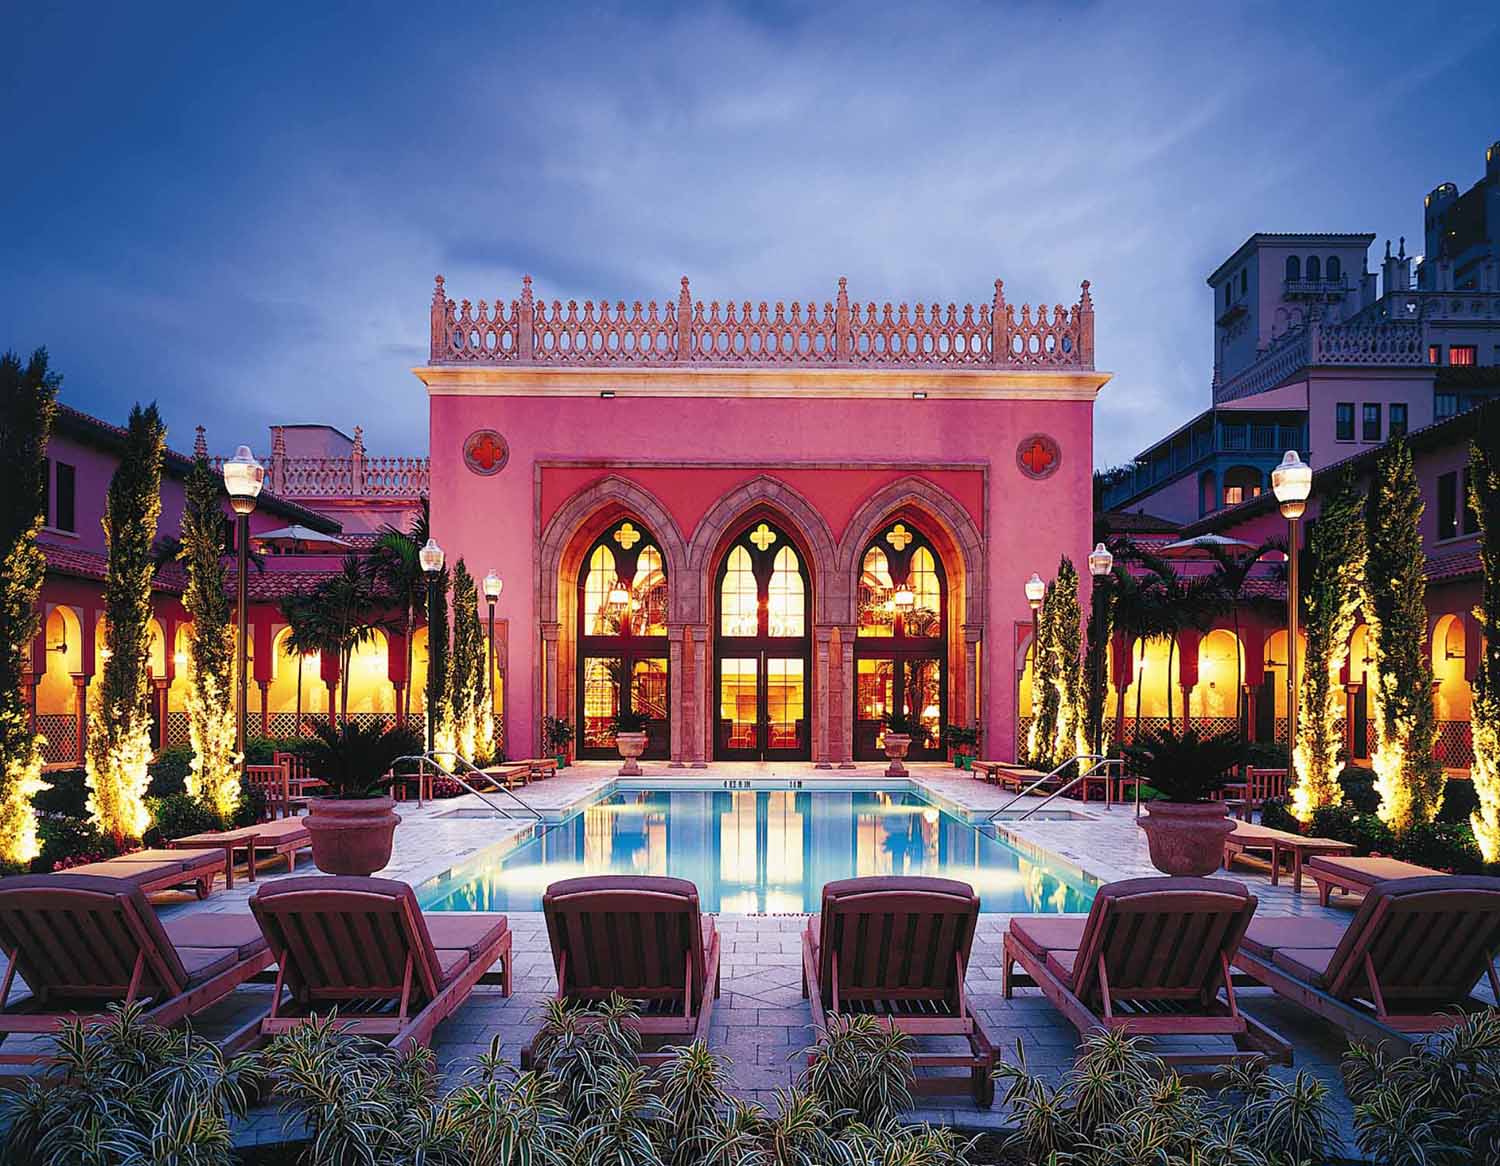 The Waldorf Astoria Spa at Boca Raton Resort & Club — Spa and Beauty Today